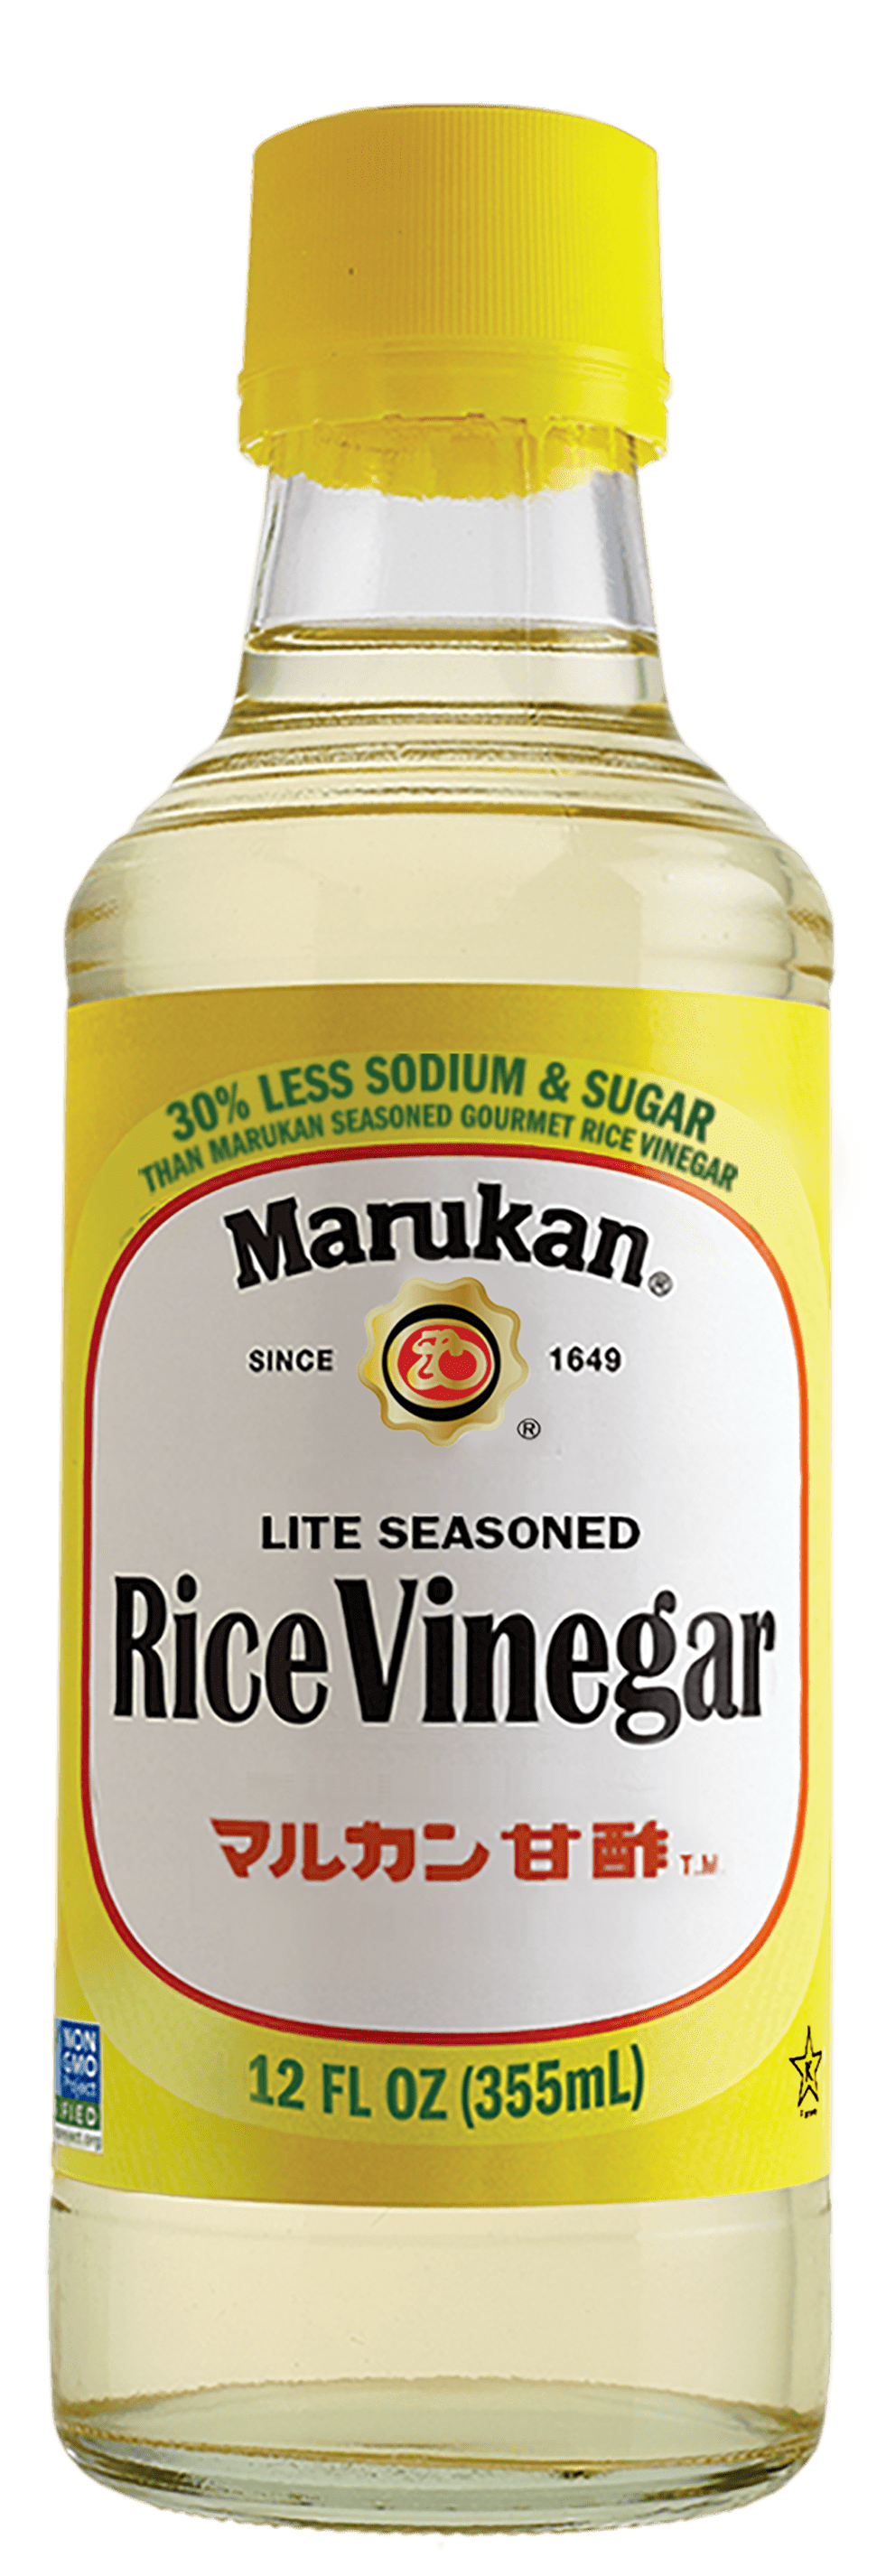 Marukan Rice Wine Vinegar unseasoned